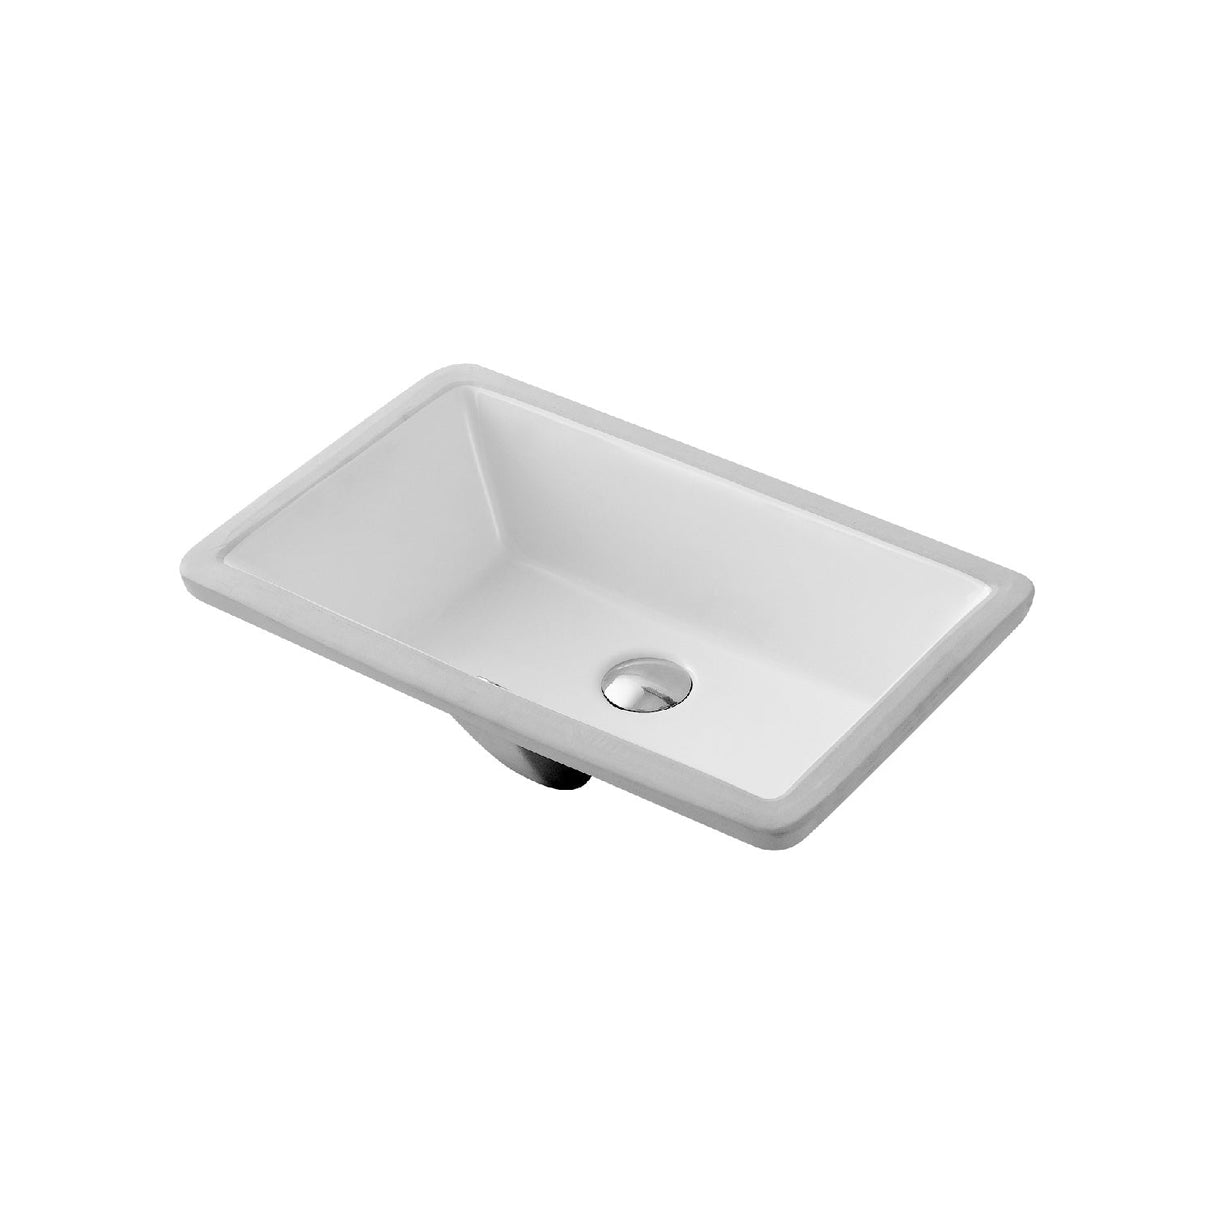 DAX Ceramic Rectangular Single Bowl Undermount Bathroom Basin, White BSN-CL2023